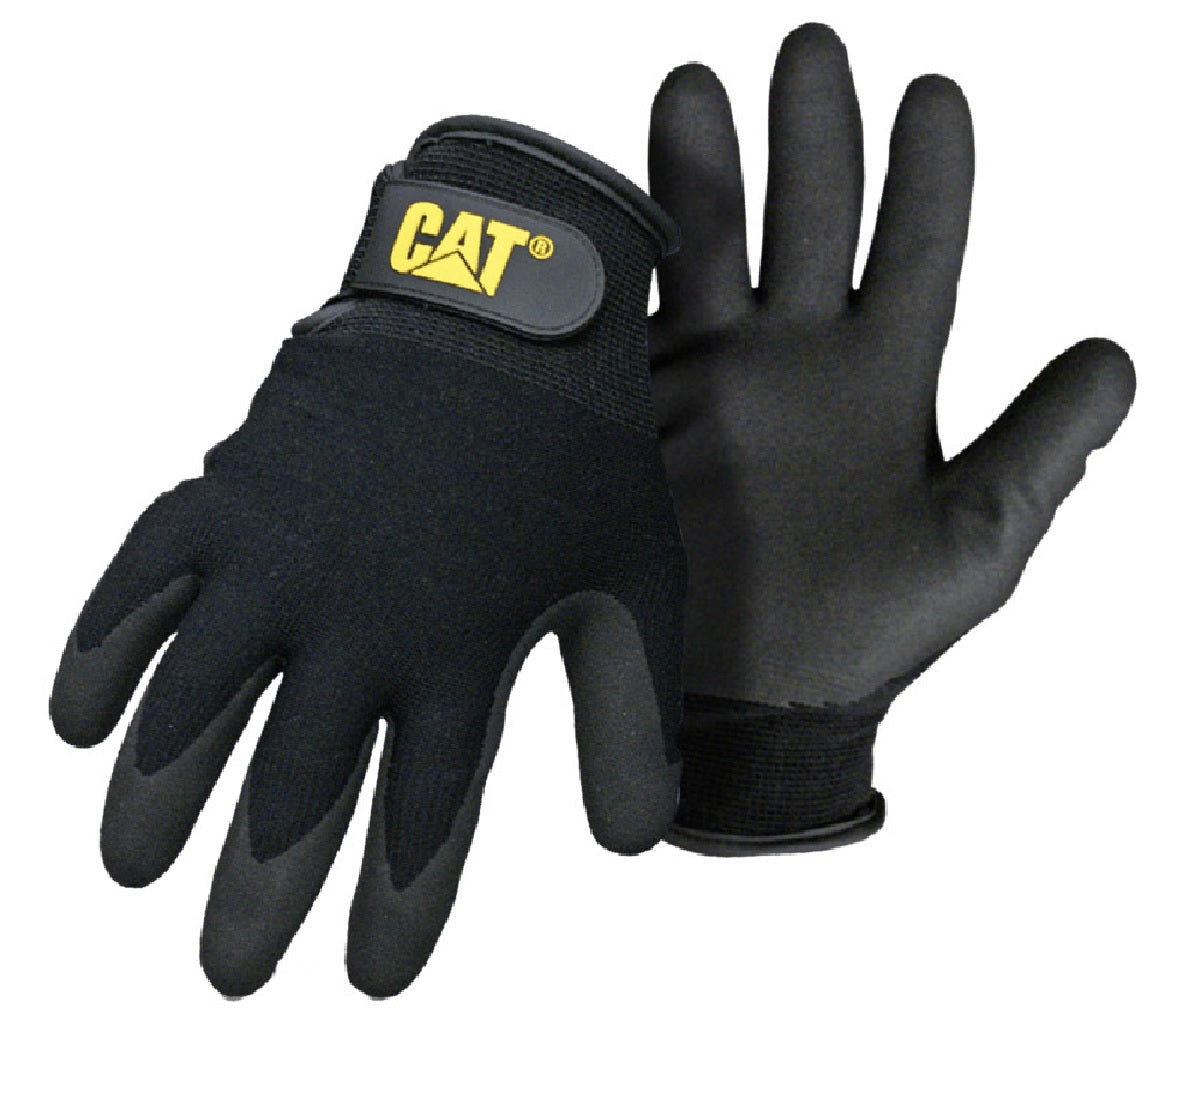 Cat CAT017414L Nylon Coated String Knit Gloves, Black, Large